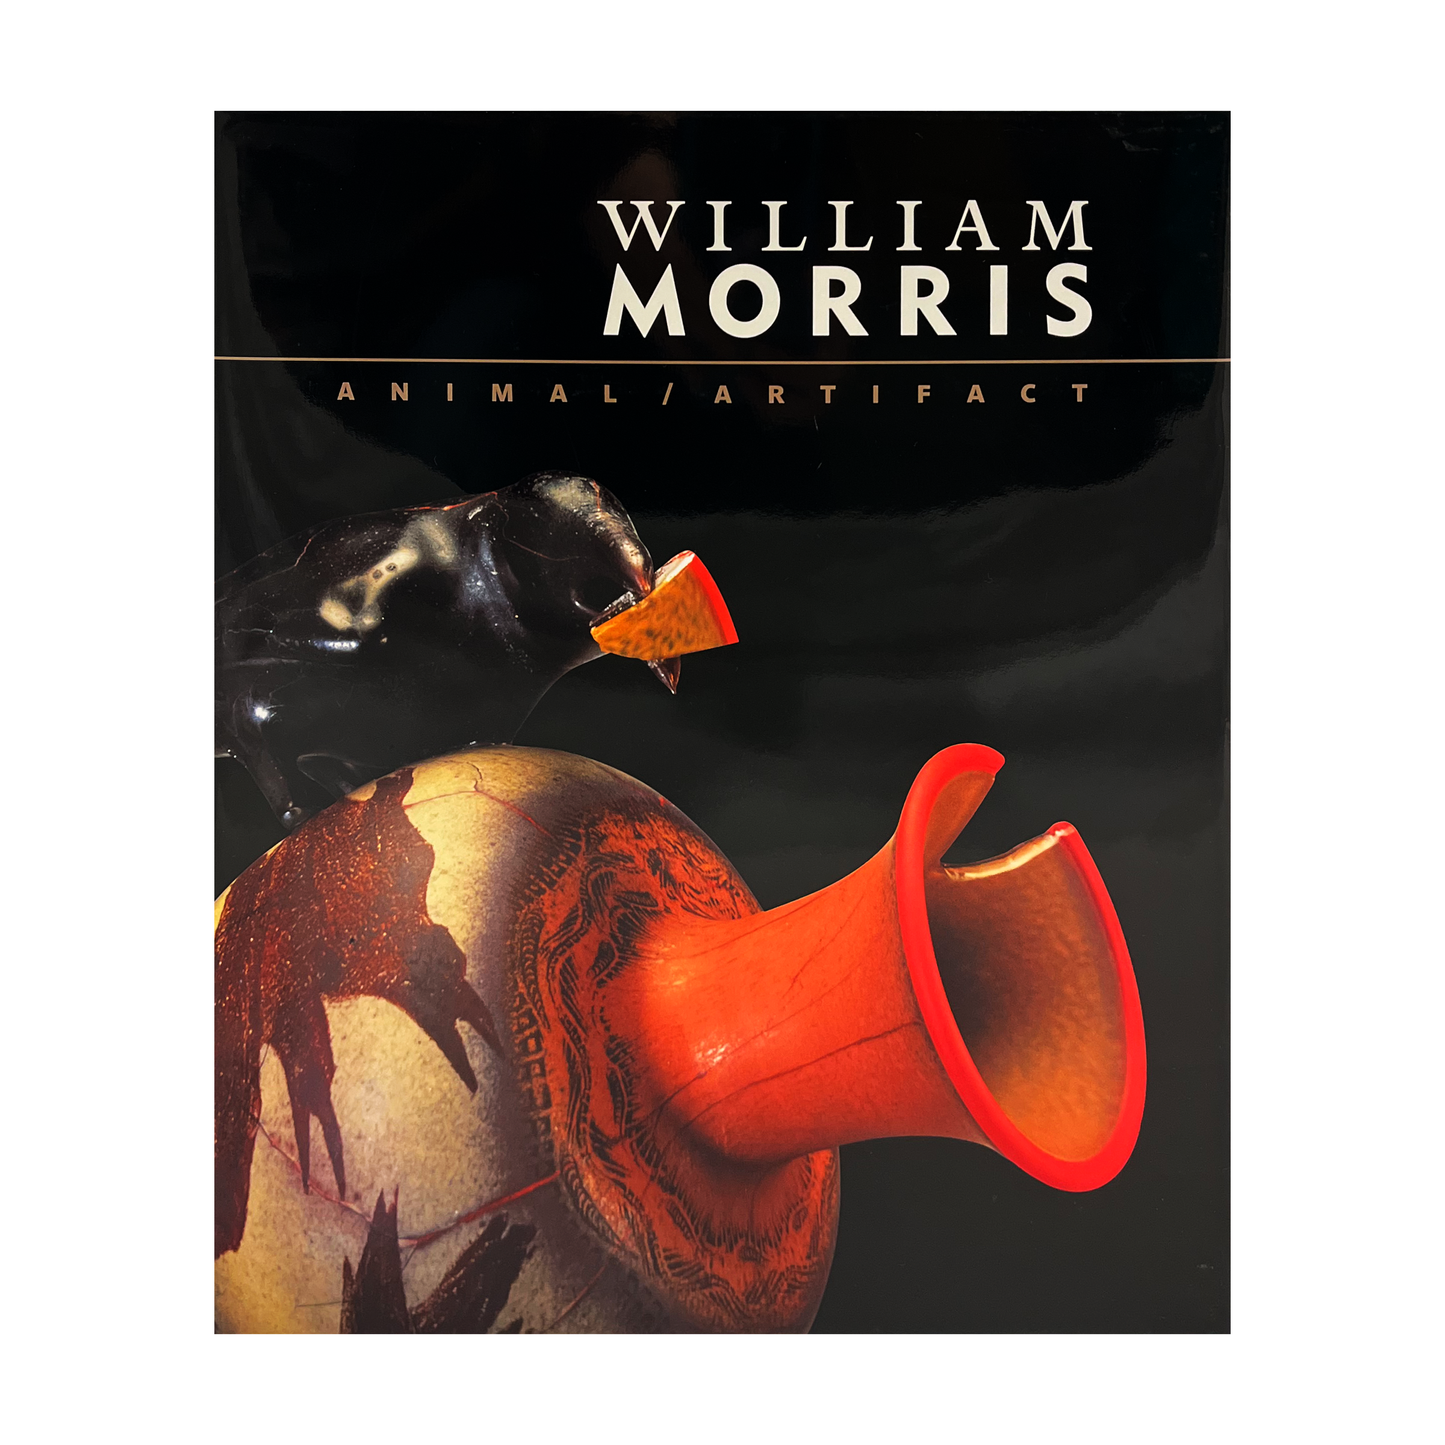 William Morris: Animal/Artifact